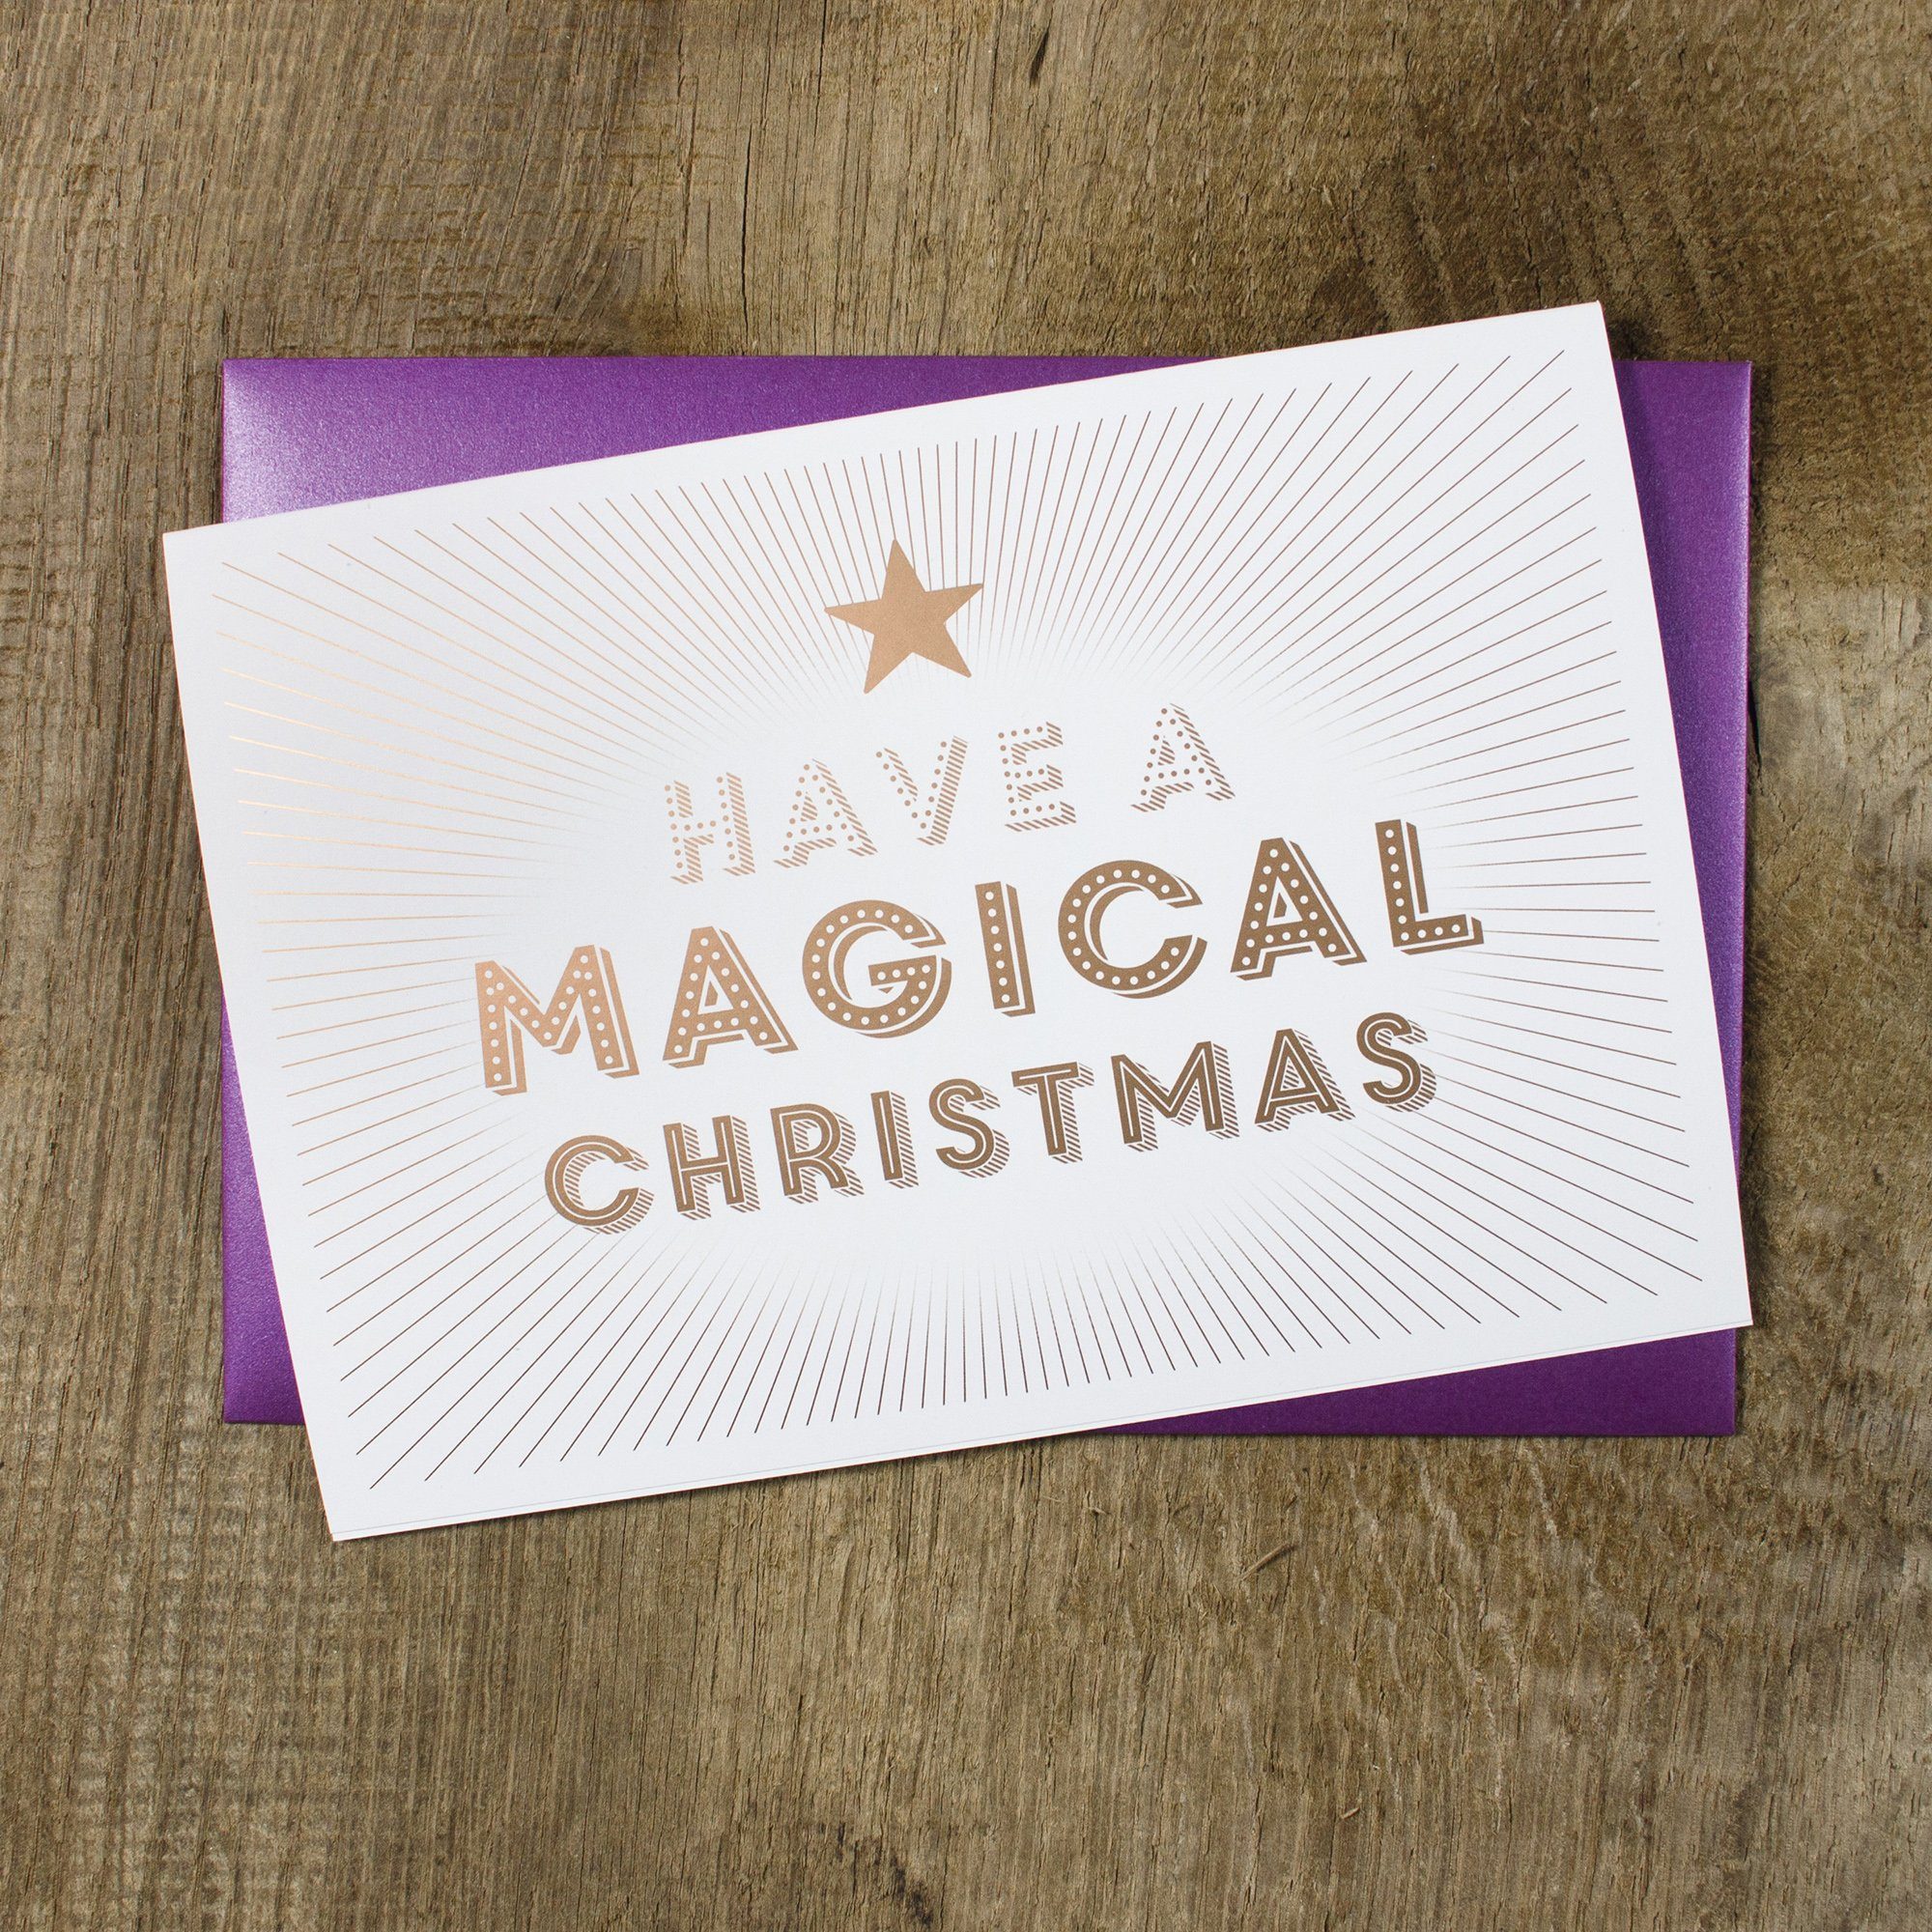 Bow & Hummingbird Grußkarten Grußkarte Magical Christmas (Umschlag in Brombeere)